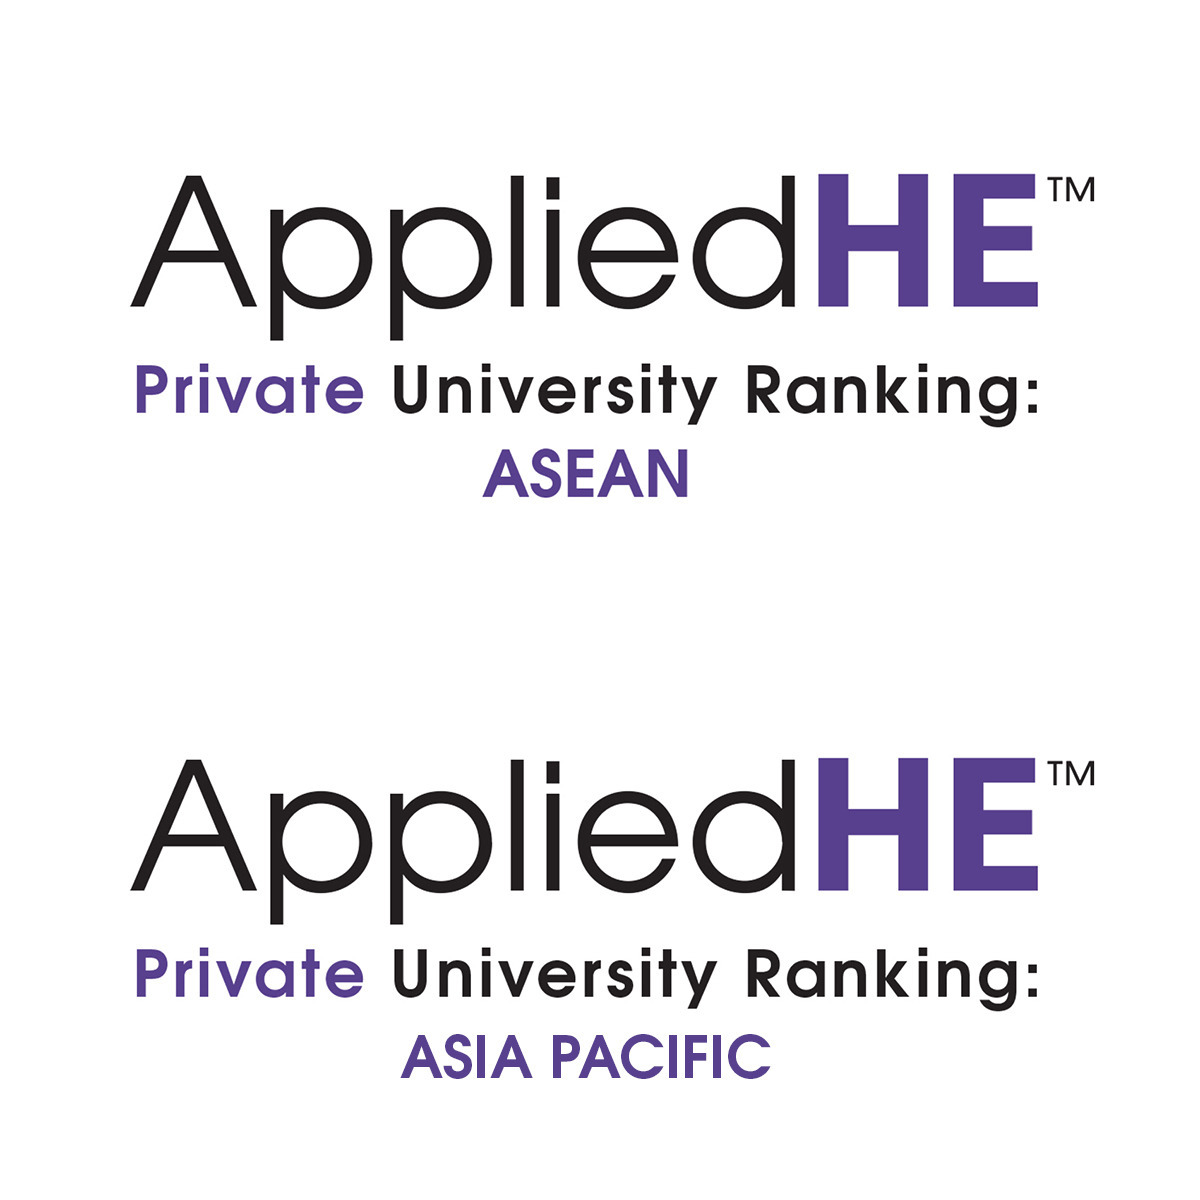 AppliedHE Ranking Data Submission Checklist